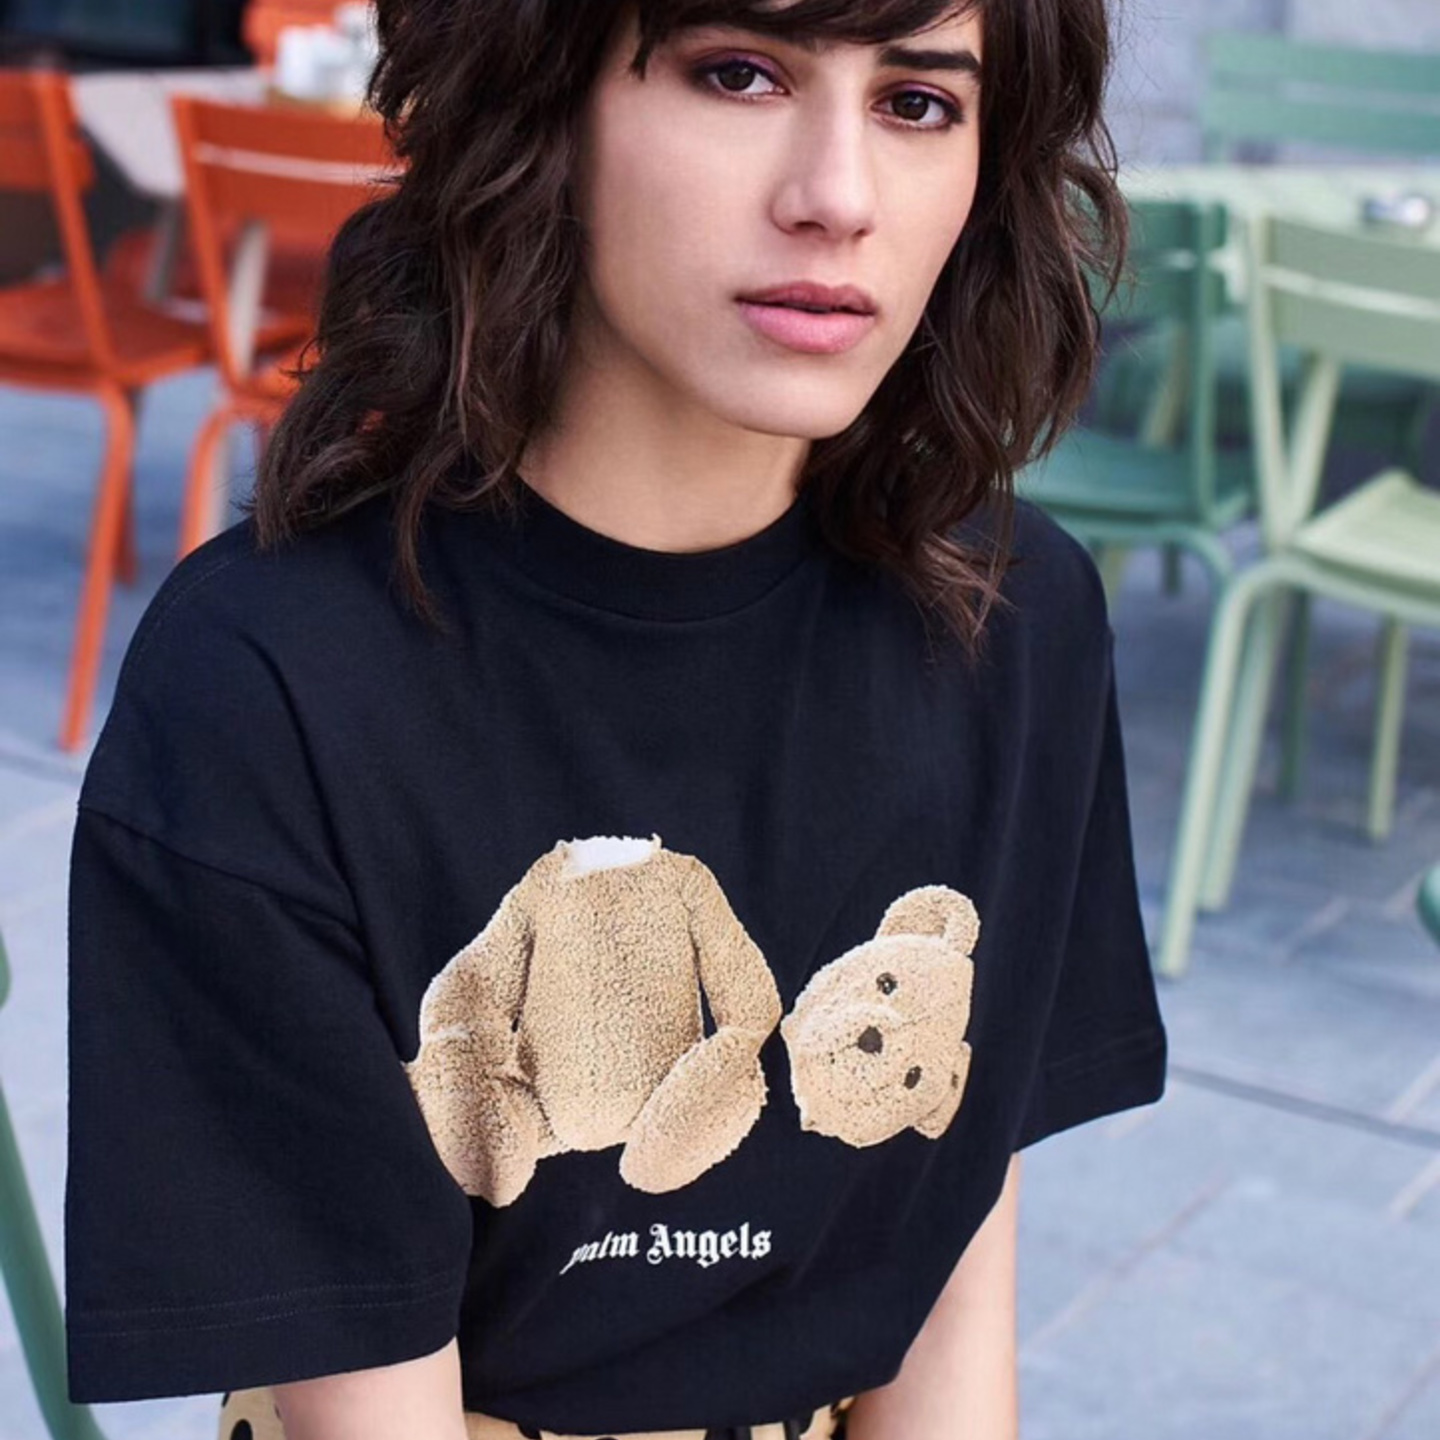 Palm Angels Headless Teddy Bear Print Black T-Shirt